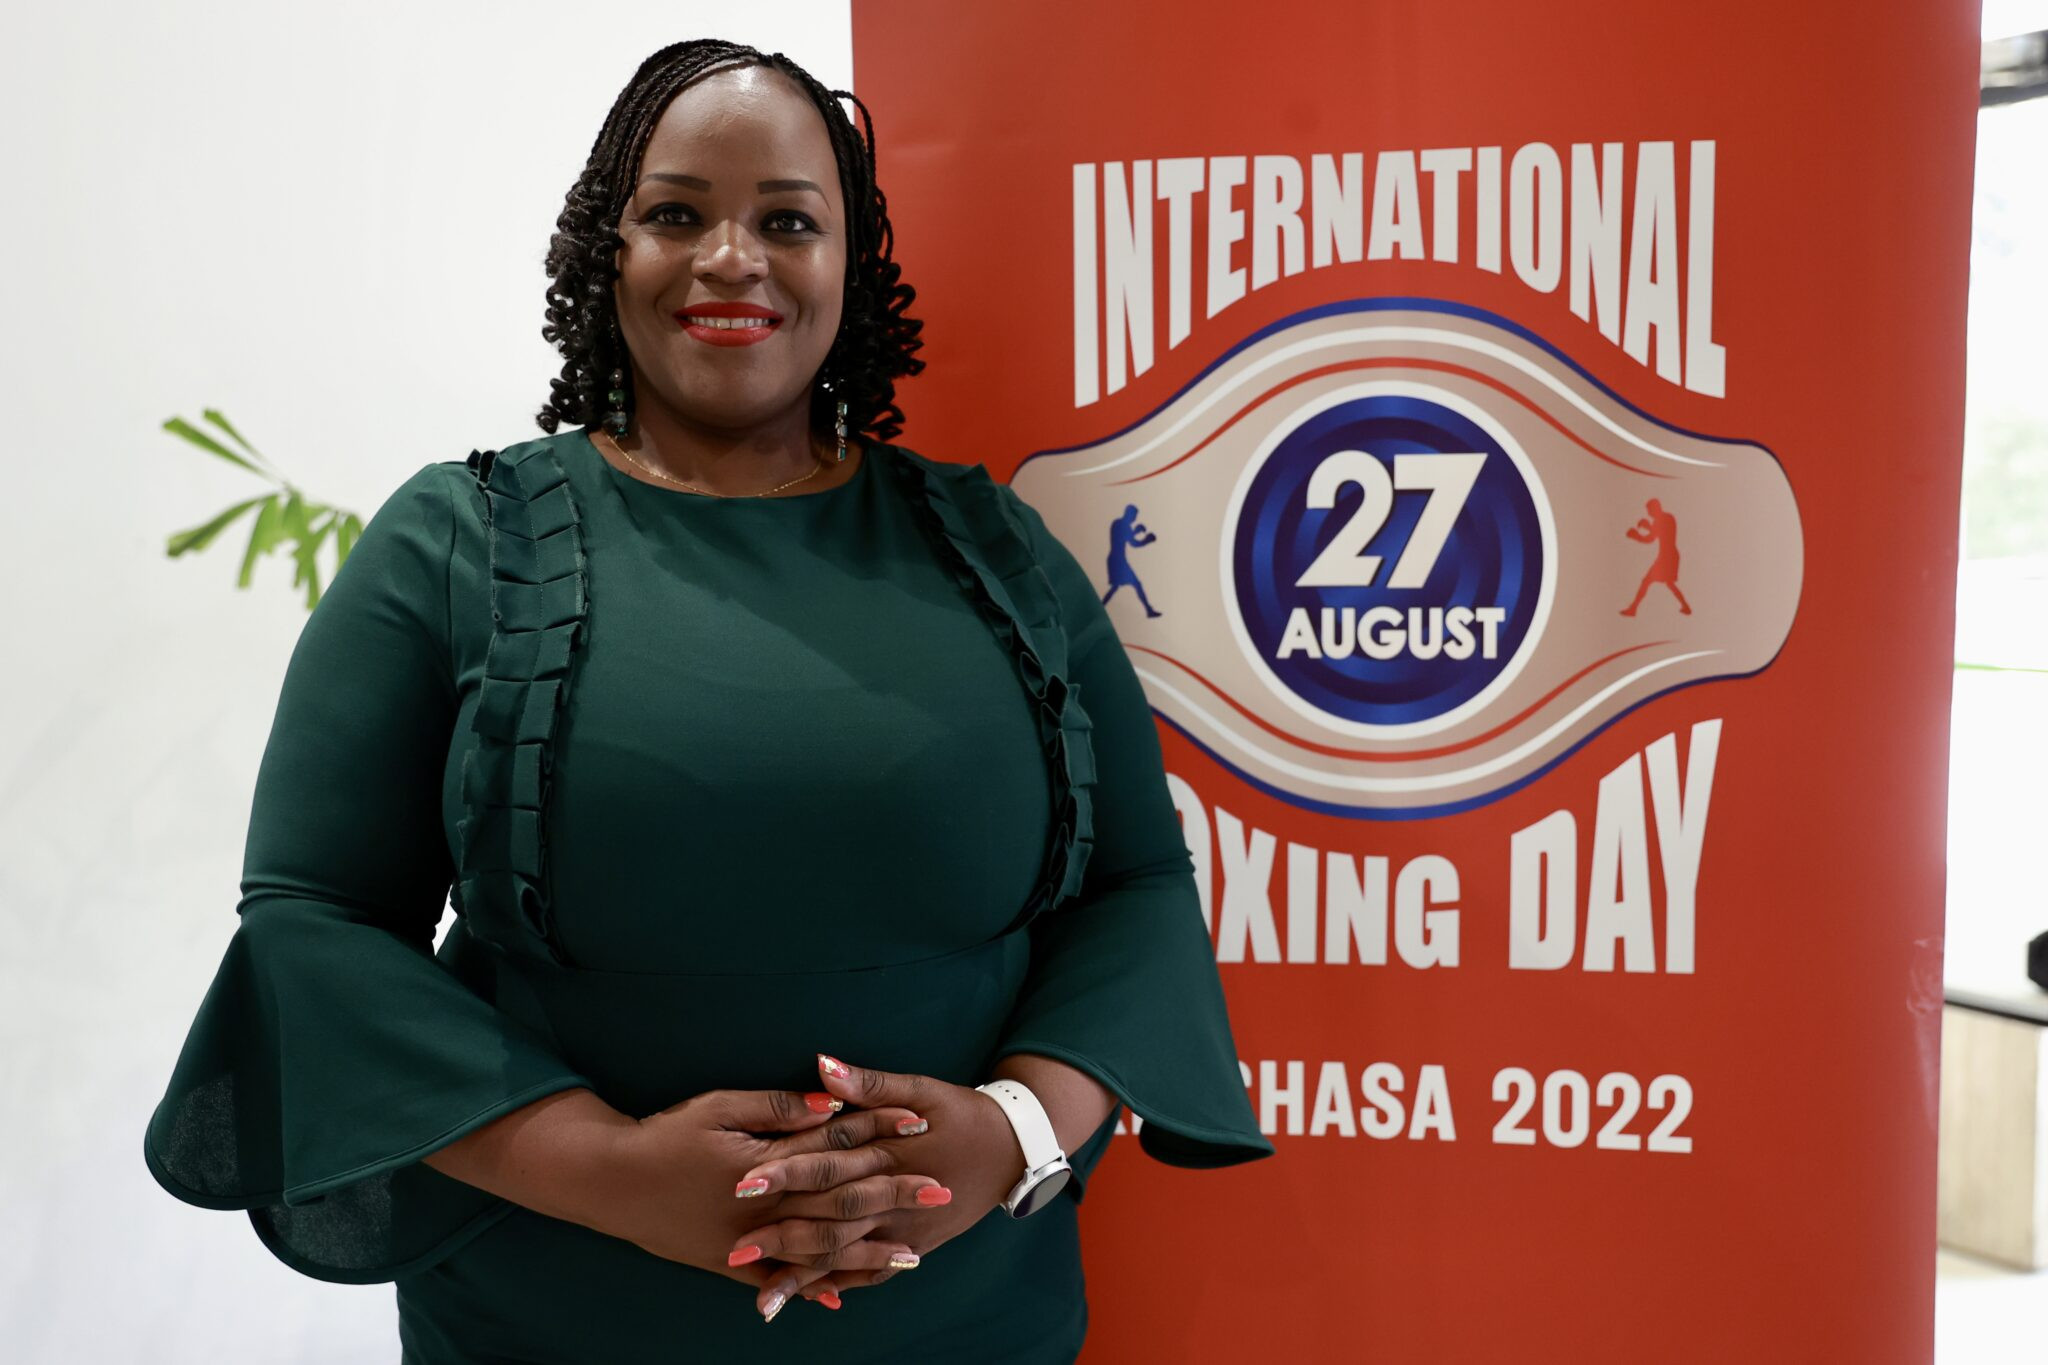 Eswatini Boxing Association President Dlamini calls for IOC and IBA transparency